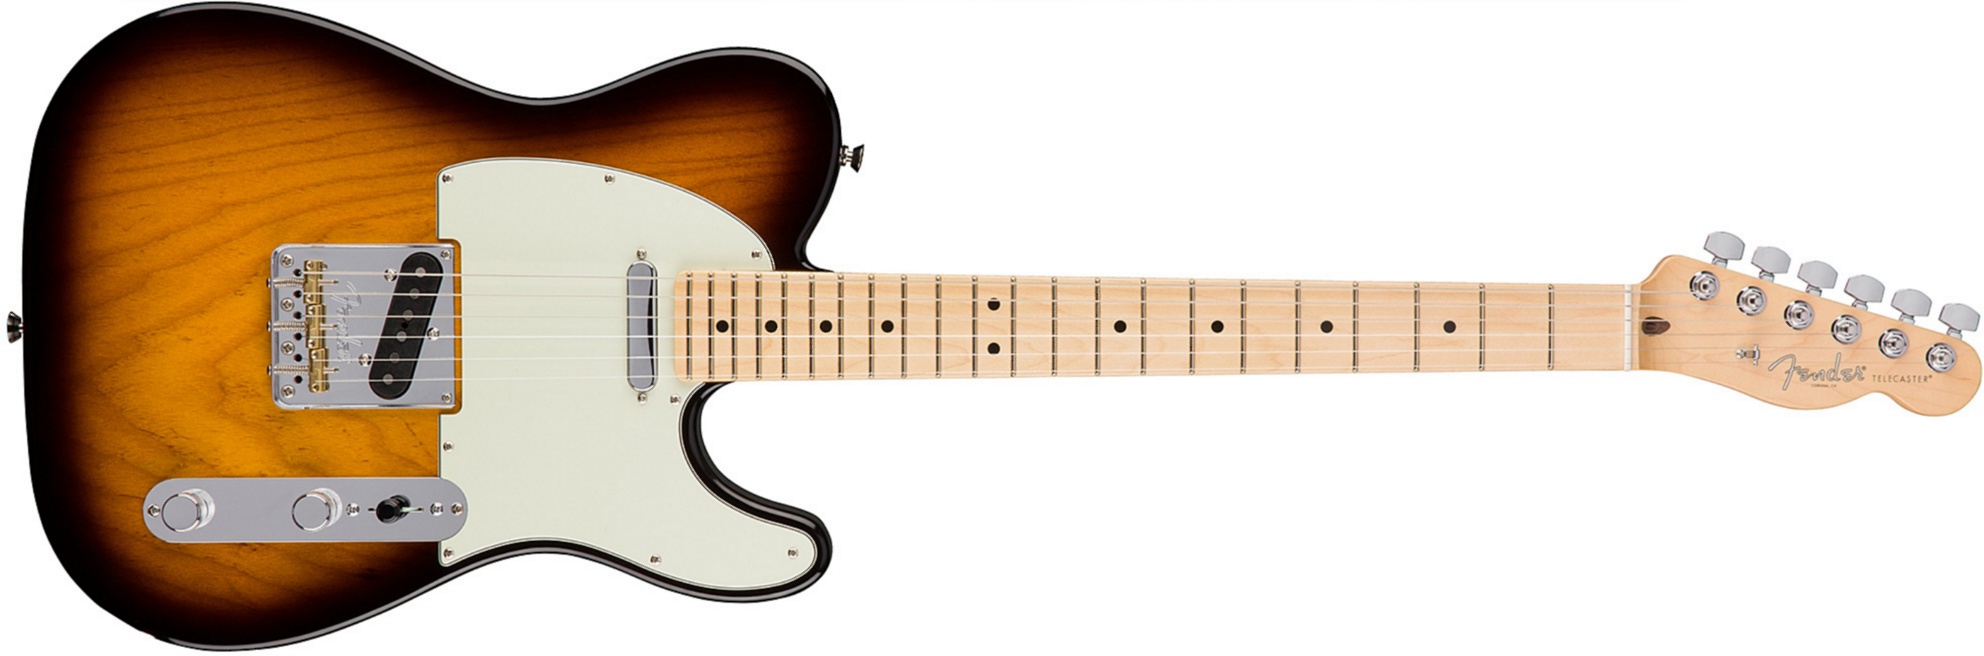 Fender Tele American Professional 2s Usa Mn - 2-color Sunburst - Tel shape electric guitar - Main picture